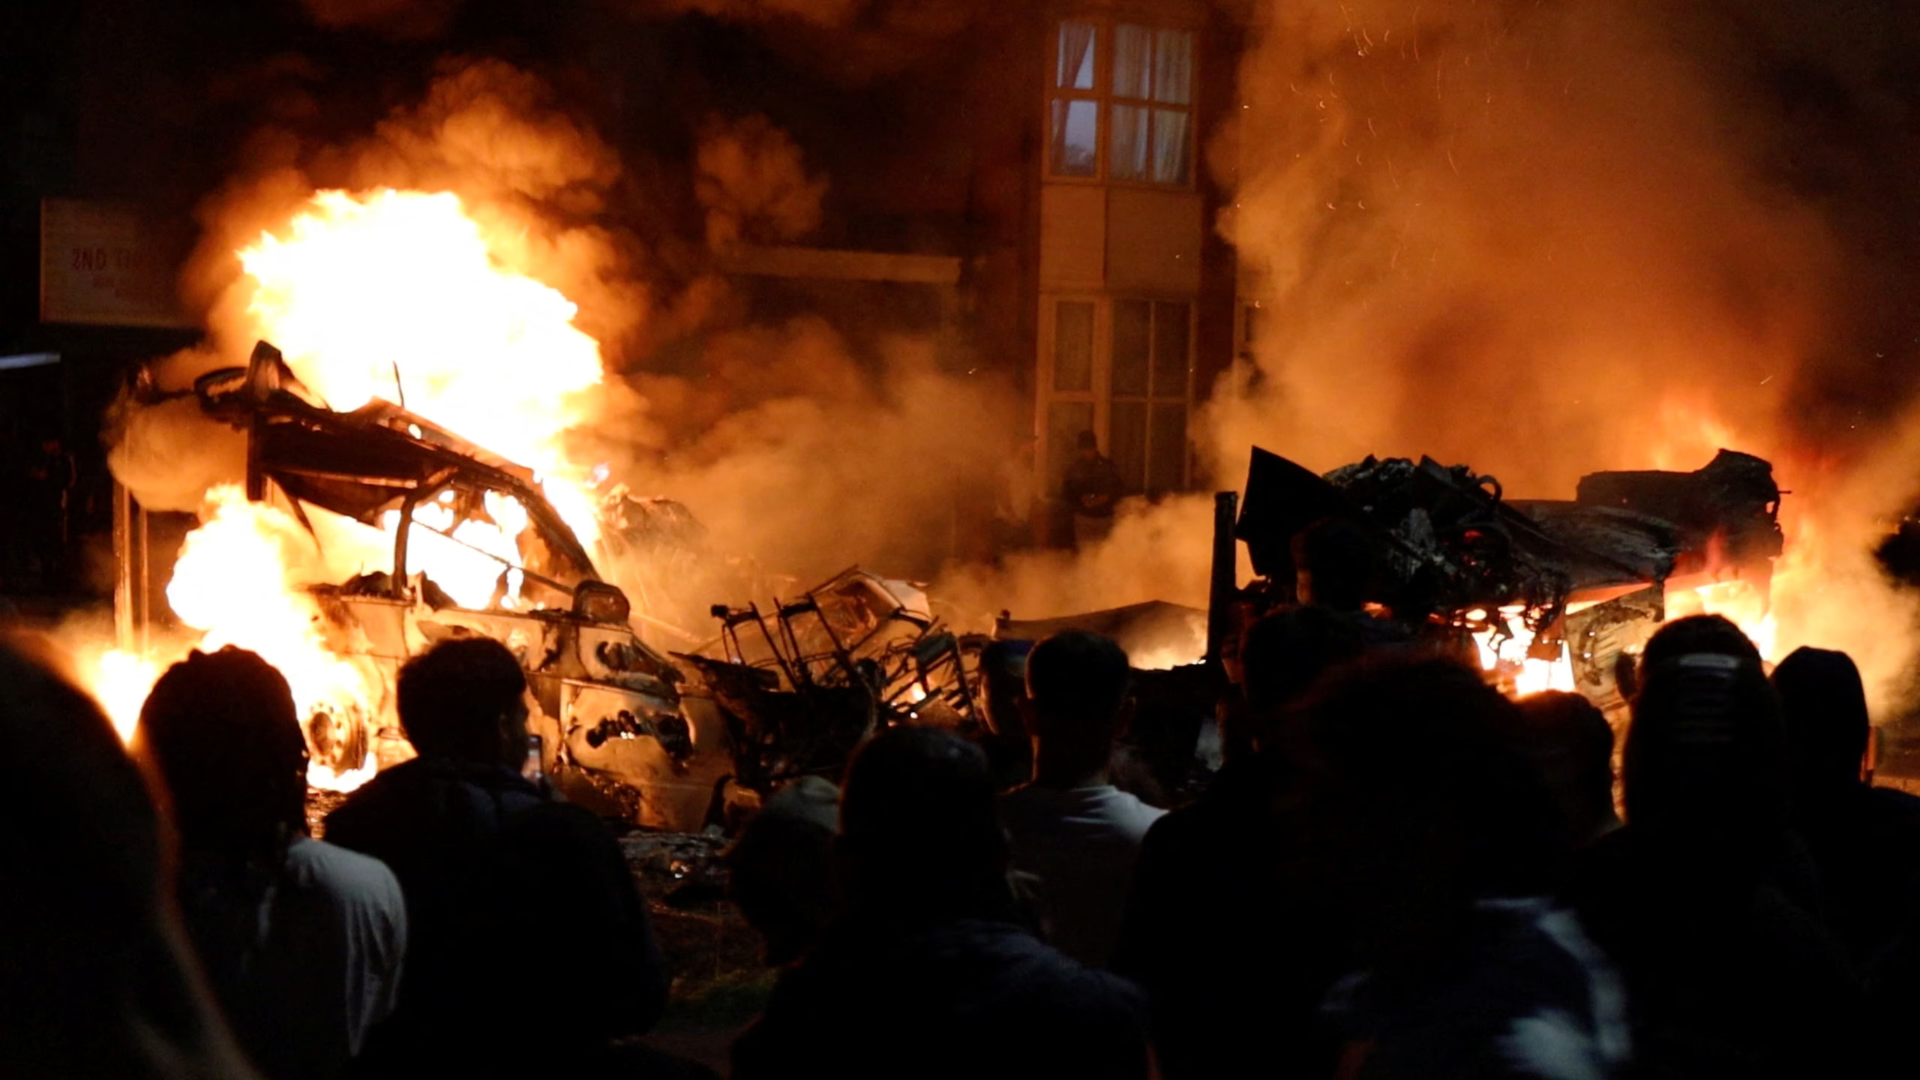 Unrest in Leeds, UK: Police Car Overturned, Bus Set Ablaze as Chaos Erupts in Harehills